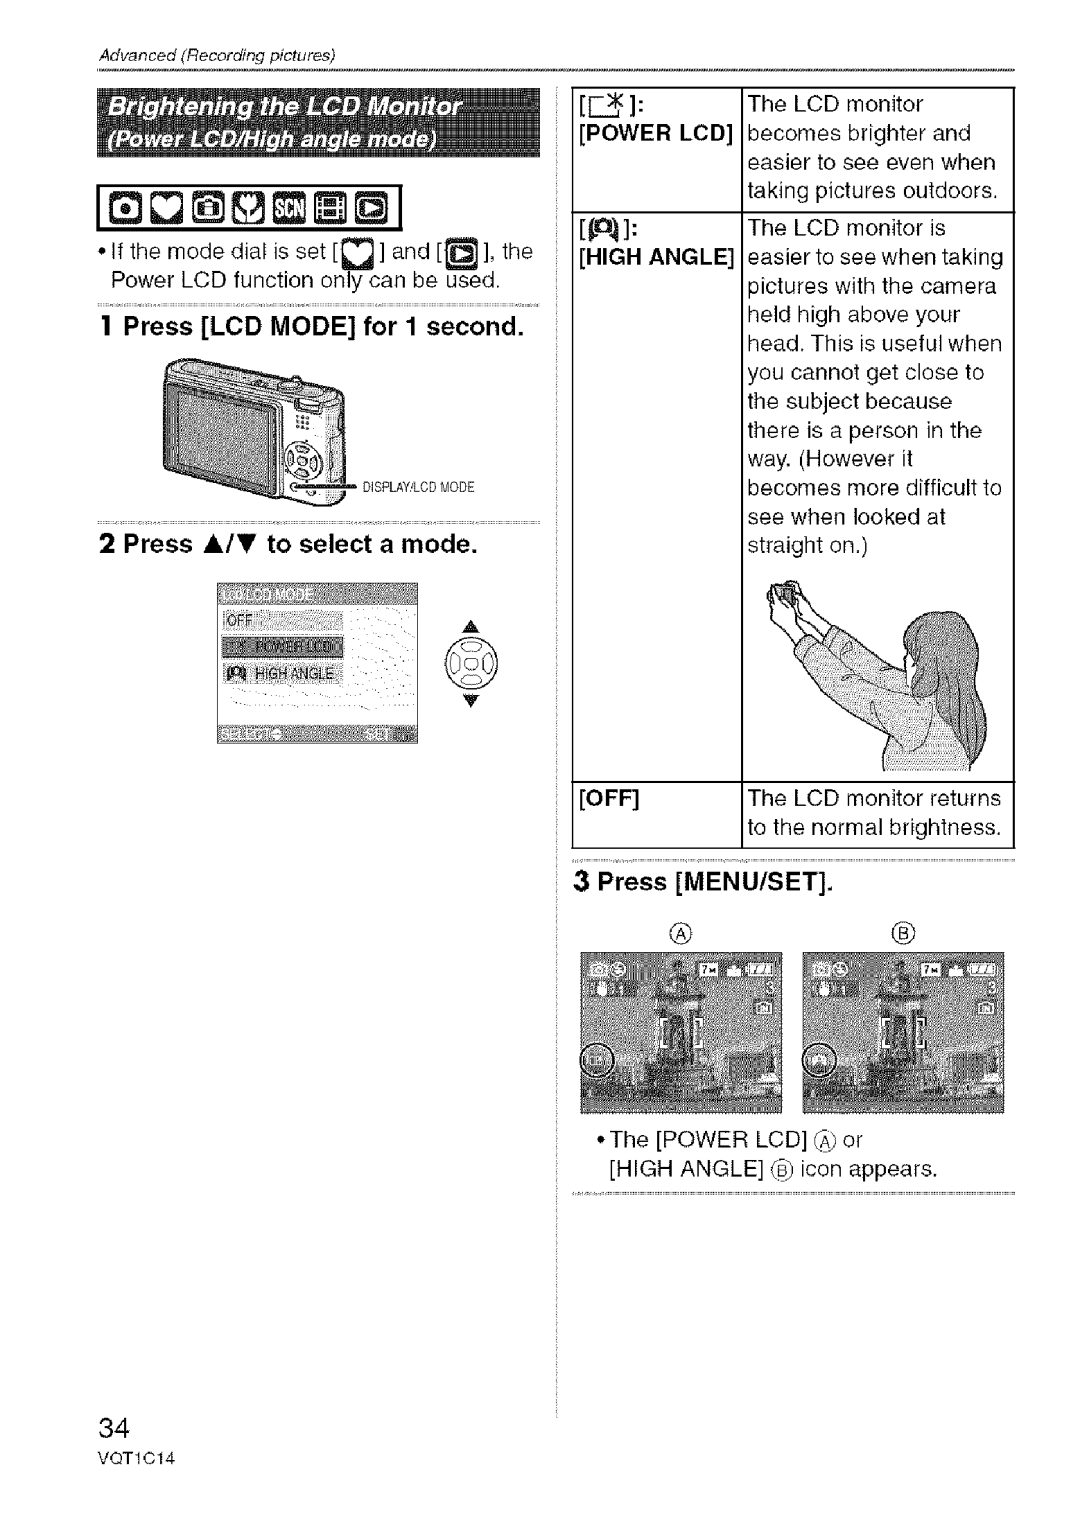 Panasonic DMC-FX12, DMC-FX10 Press LCD Mode for I second, Press A/T to select a mode, Power LCD High Angle, Off, Menu/Set 